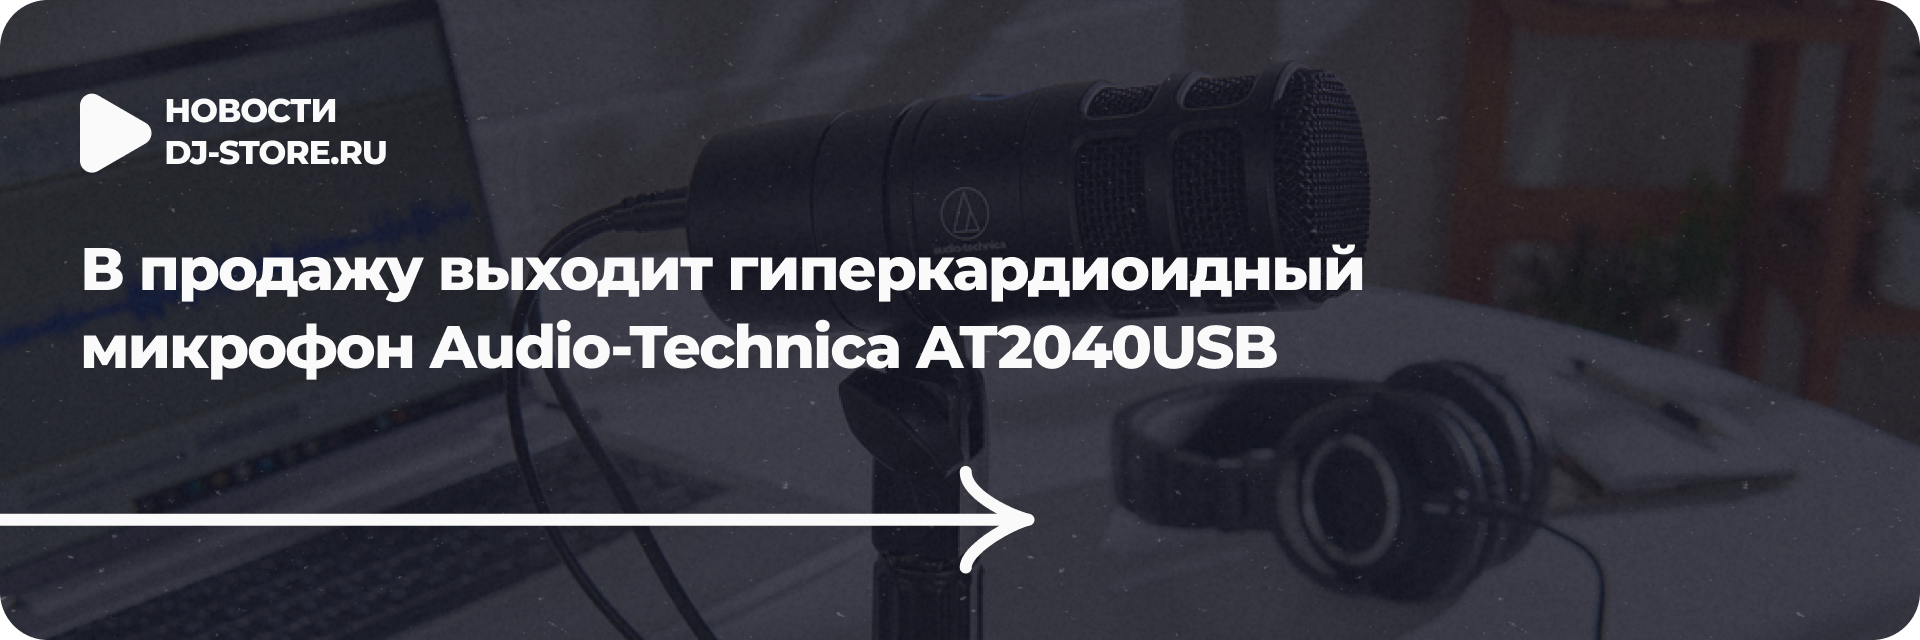 Гиперкардиоидный микрофон Audio-Technica AT2040USB